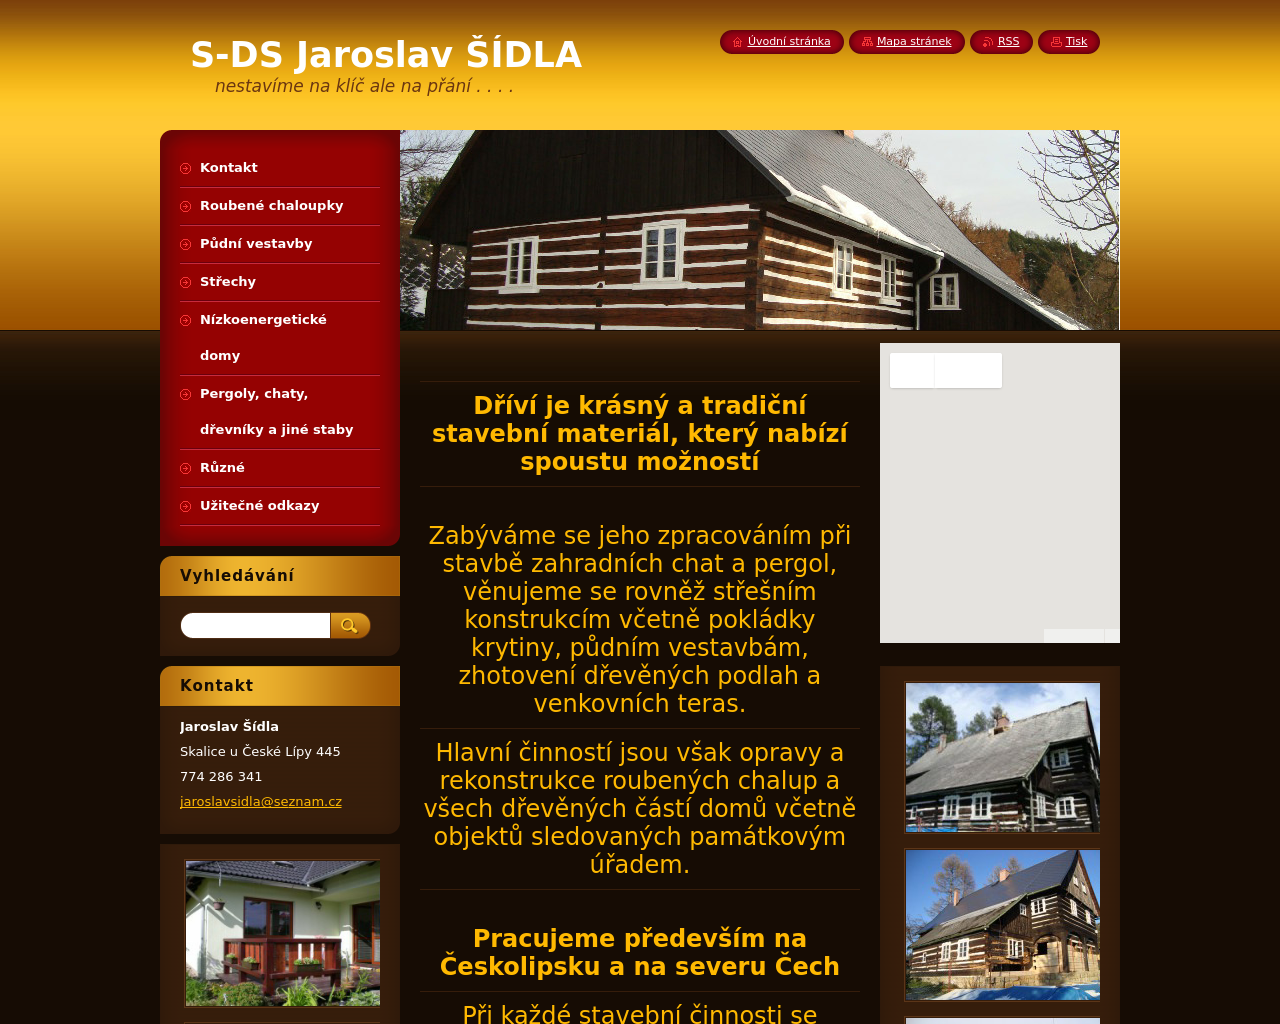 Site Image s-ds.cz v 1280x1024